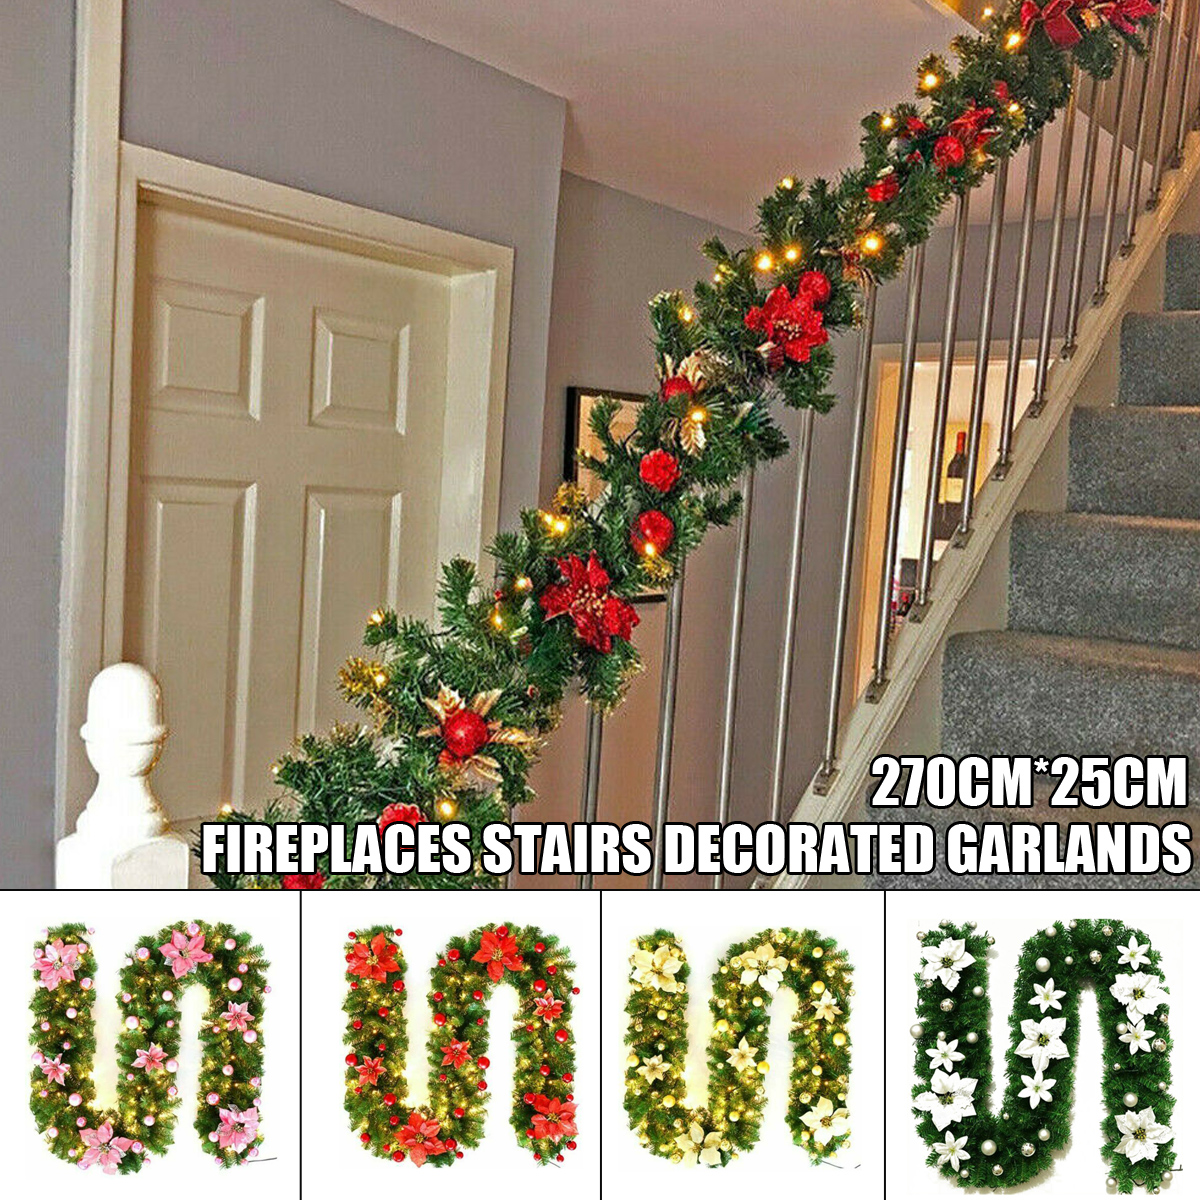 27m-Christmas-Tree-Wreath-Door-Hanging-Garland-Window-Ornament-Xmas-Party-Decor-Christmas-Decoration-1771839-1